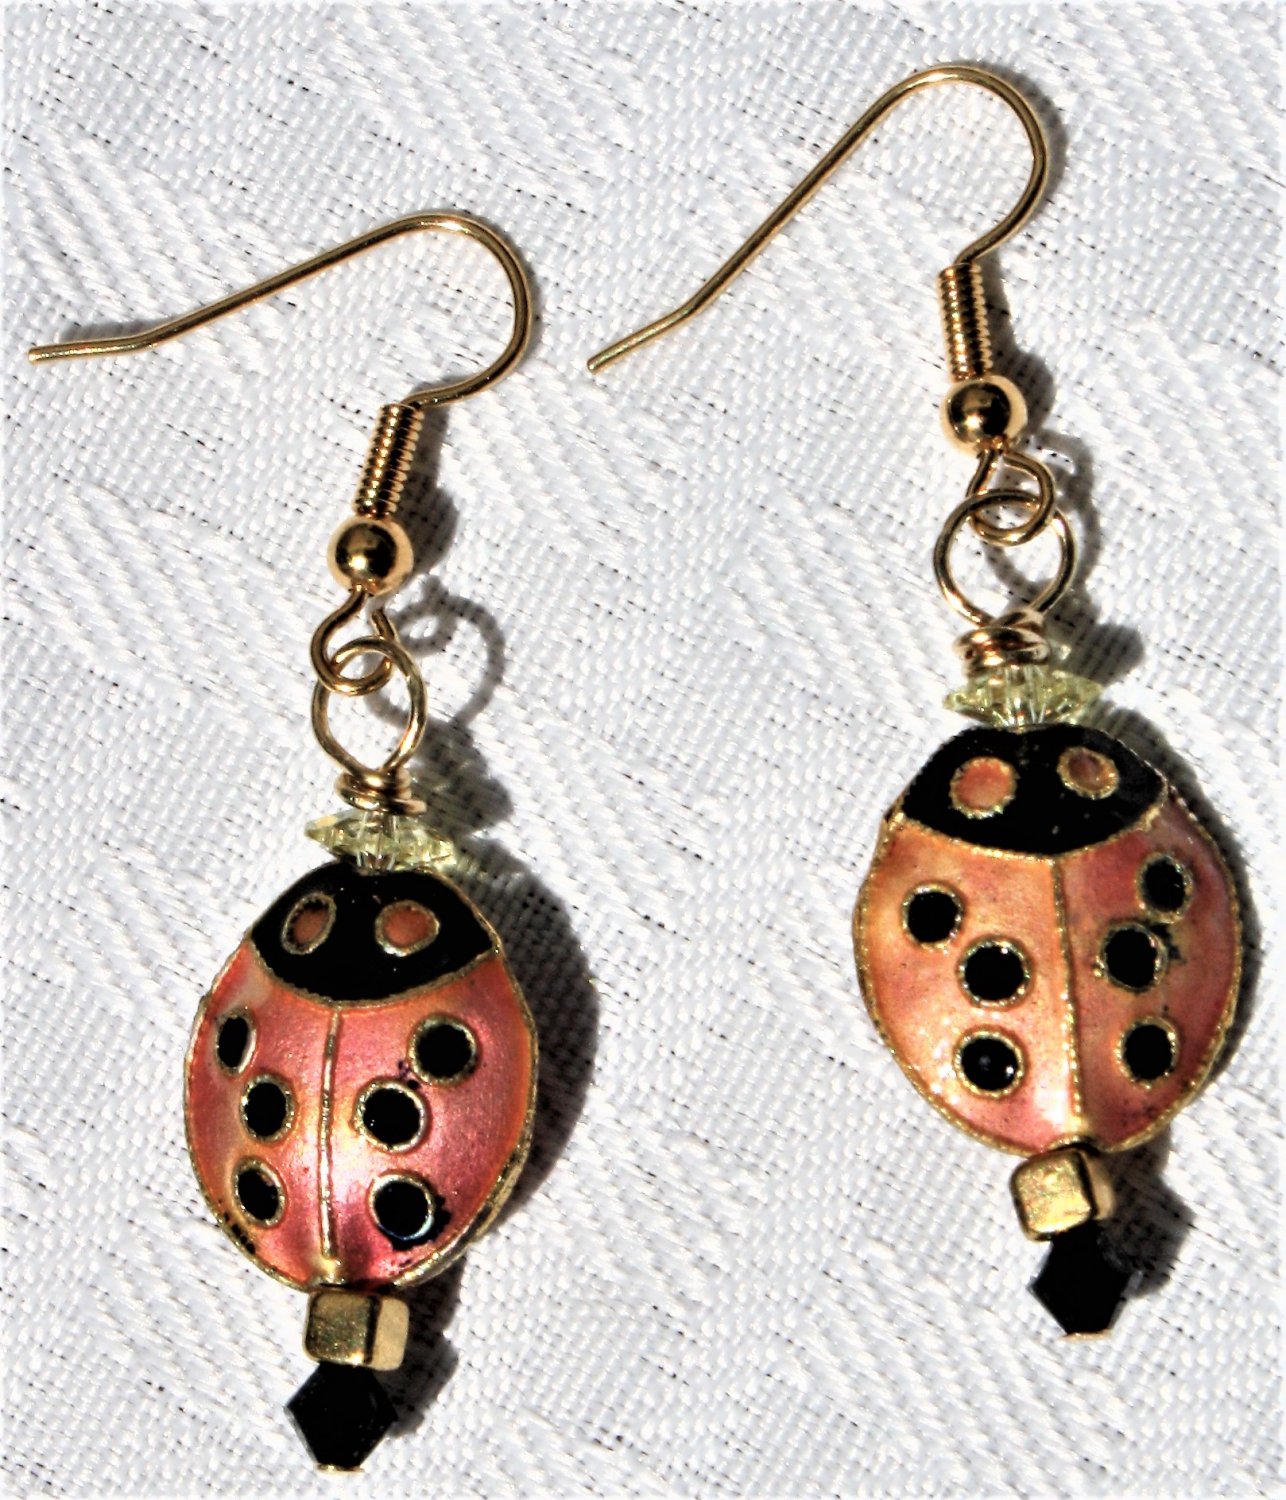 Cloisonne' Ladybug Earrings - Item #E610